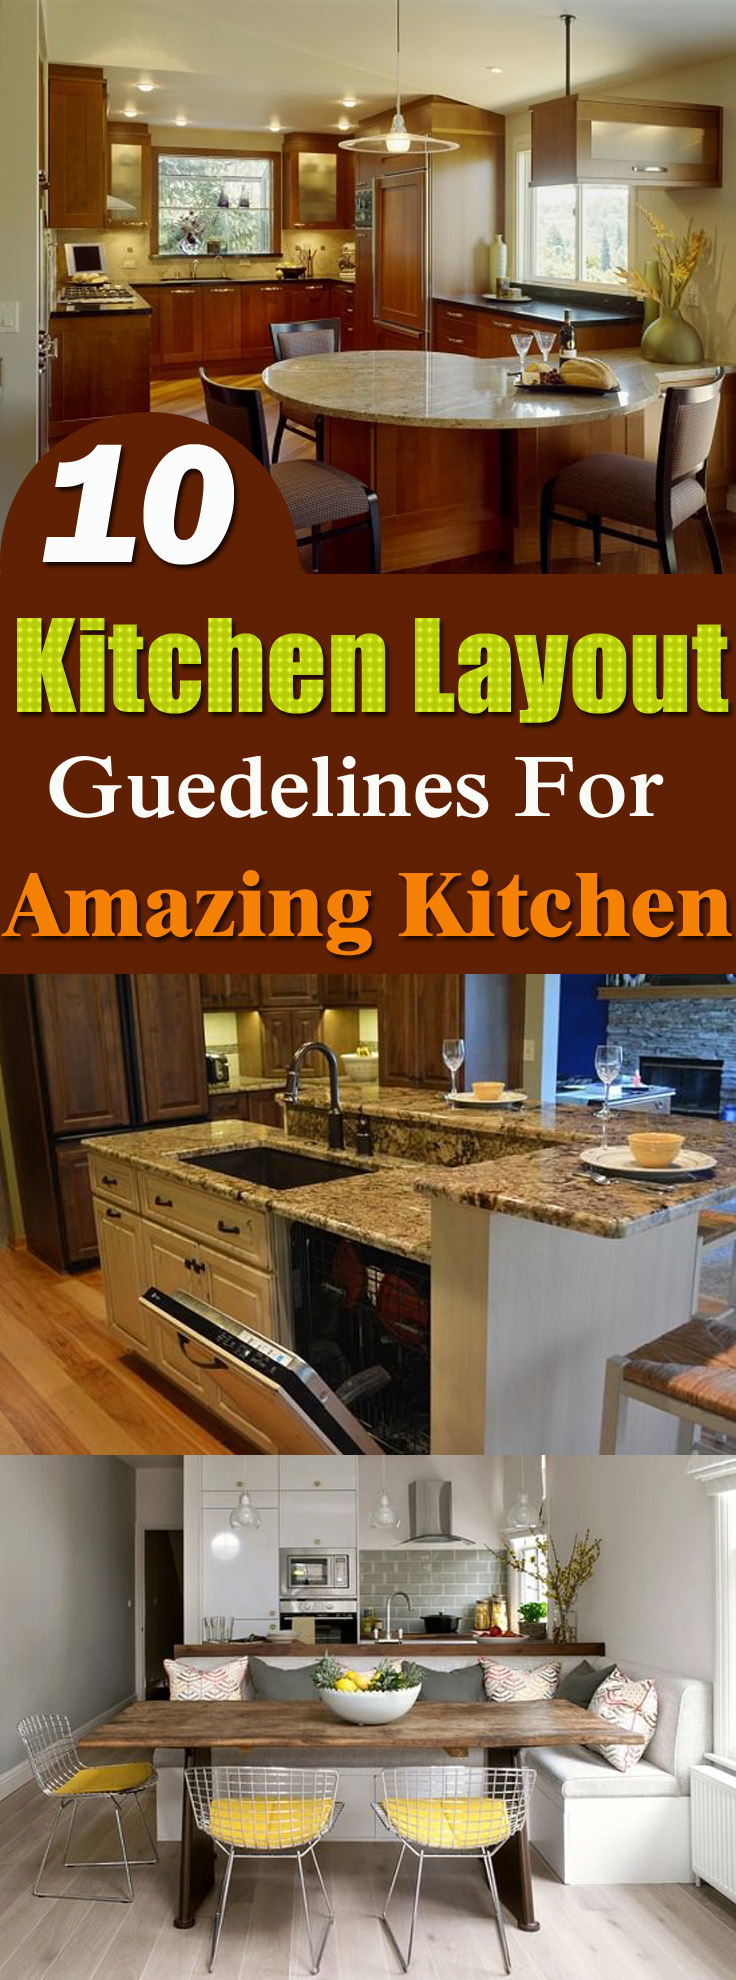 10 Kitchen Layout Guidelines for Amazing Kitchen - Citchen